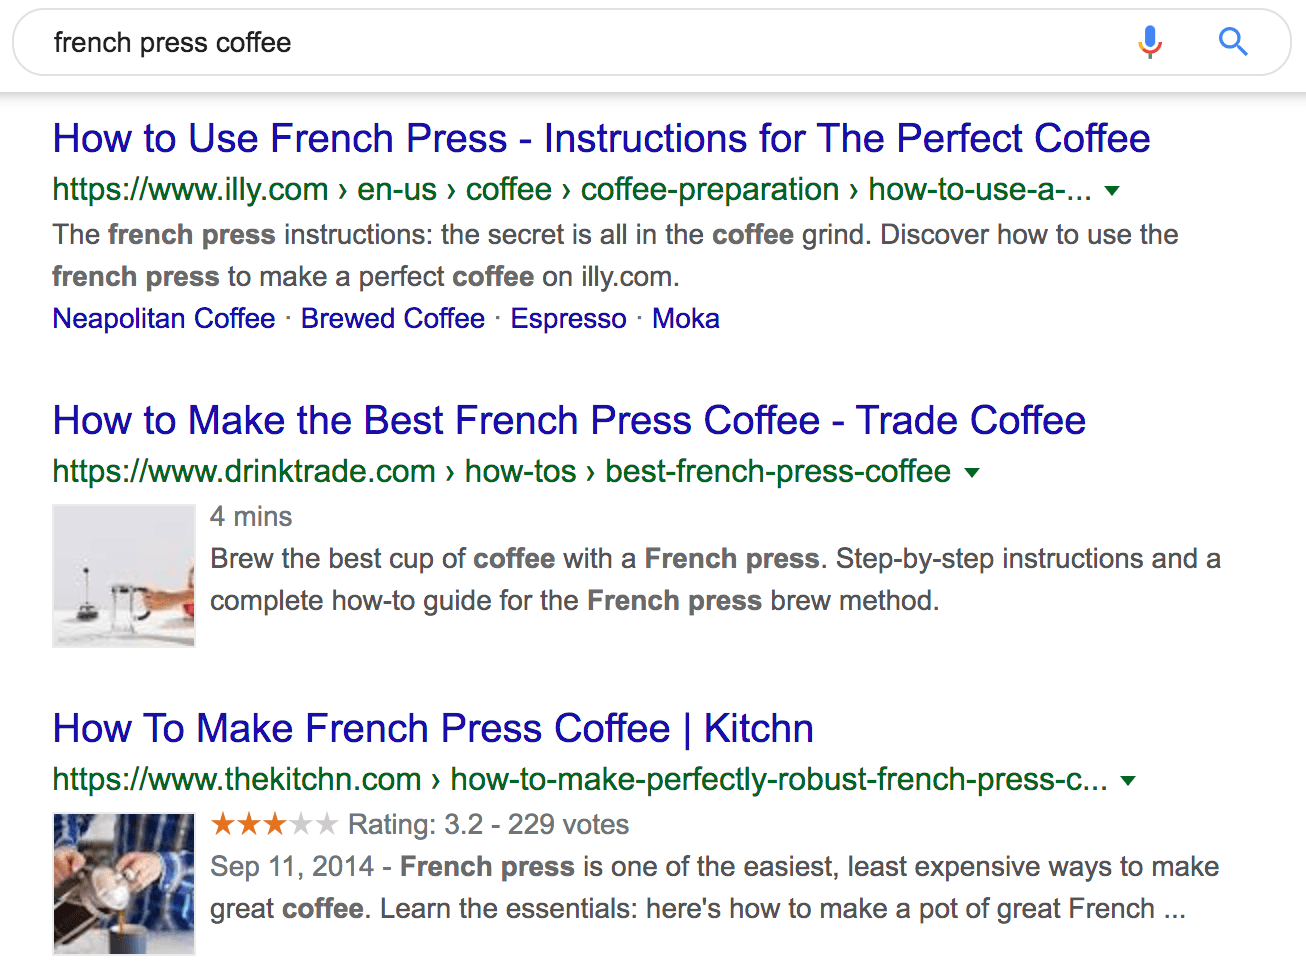 топ-результаты по поиску «french press coffee»